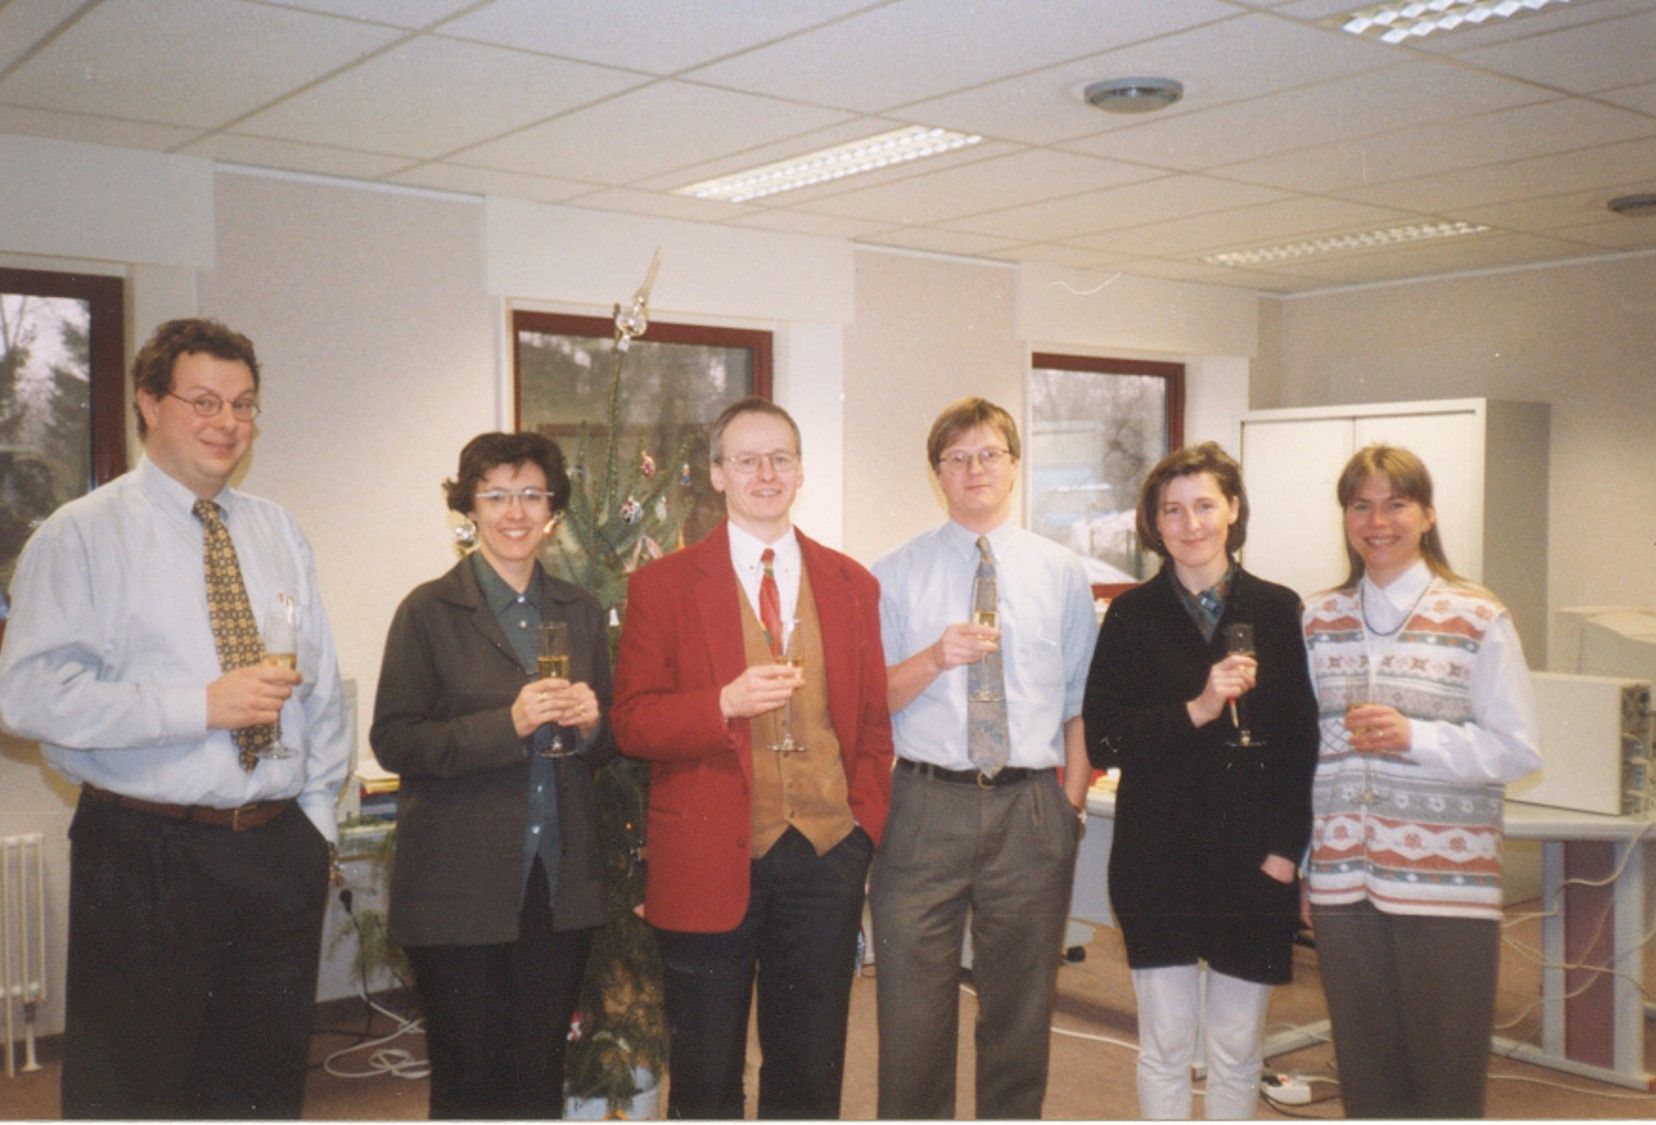 1995 - From left to right: Wim Goemaere, Marijke Lein, Jo Bury, Rudi Dekeyser, Claudine Bogaert, and Melinda De Rijck.